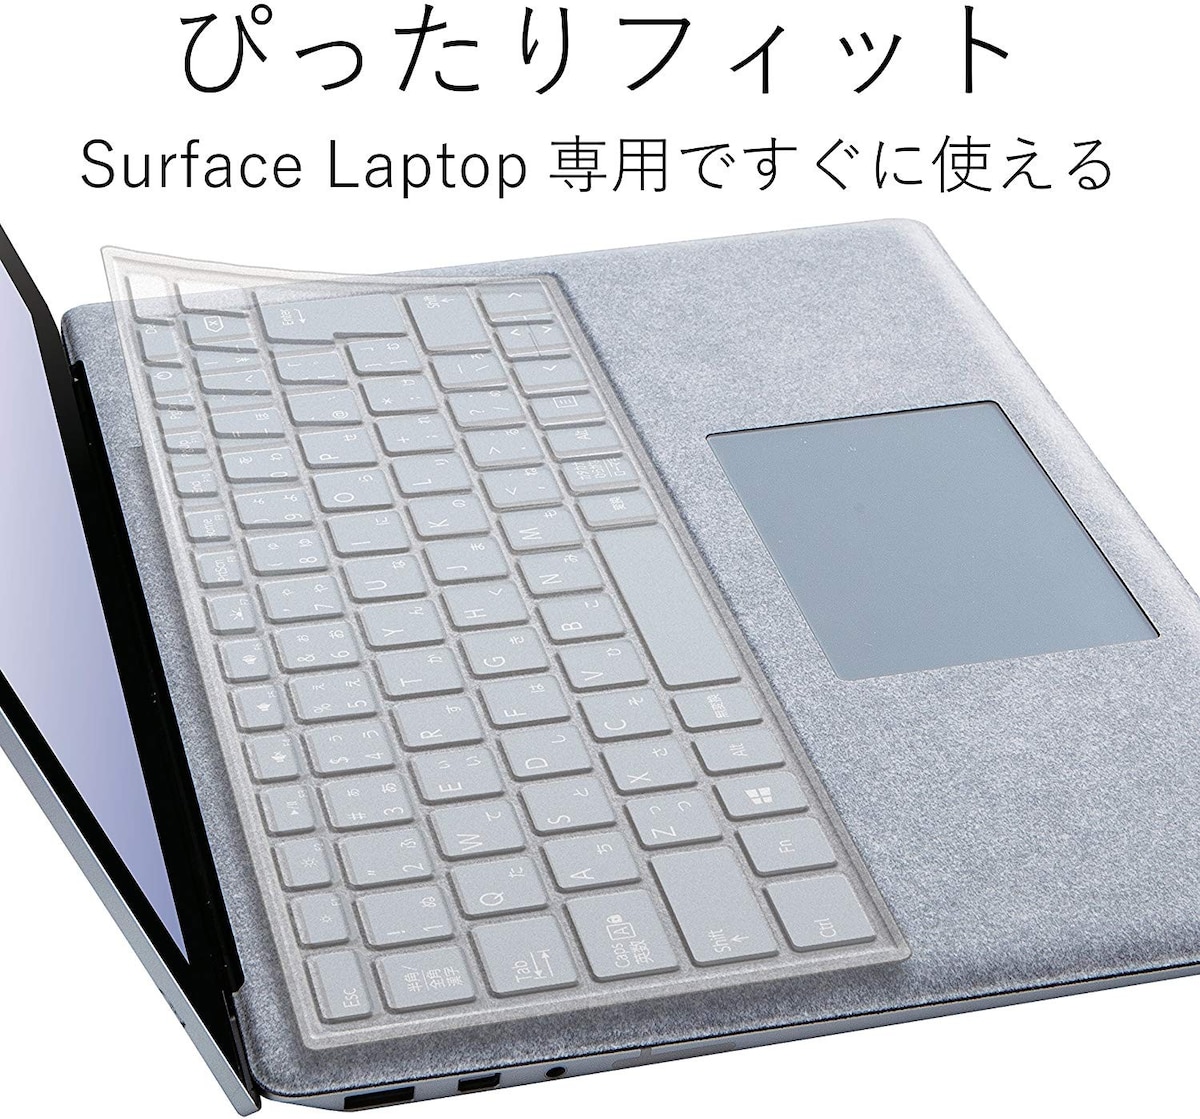   Surface Laptop  対応 キーボードカバー画像2 